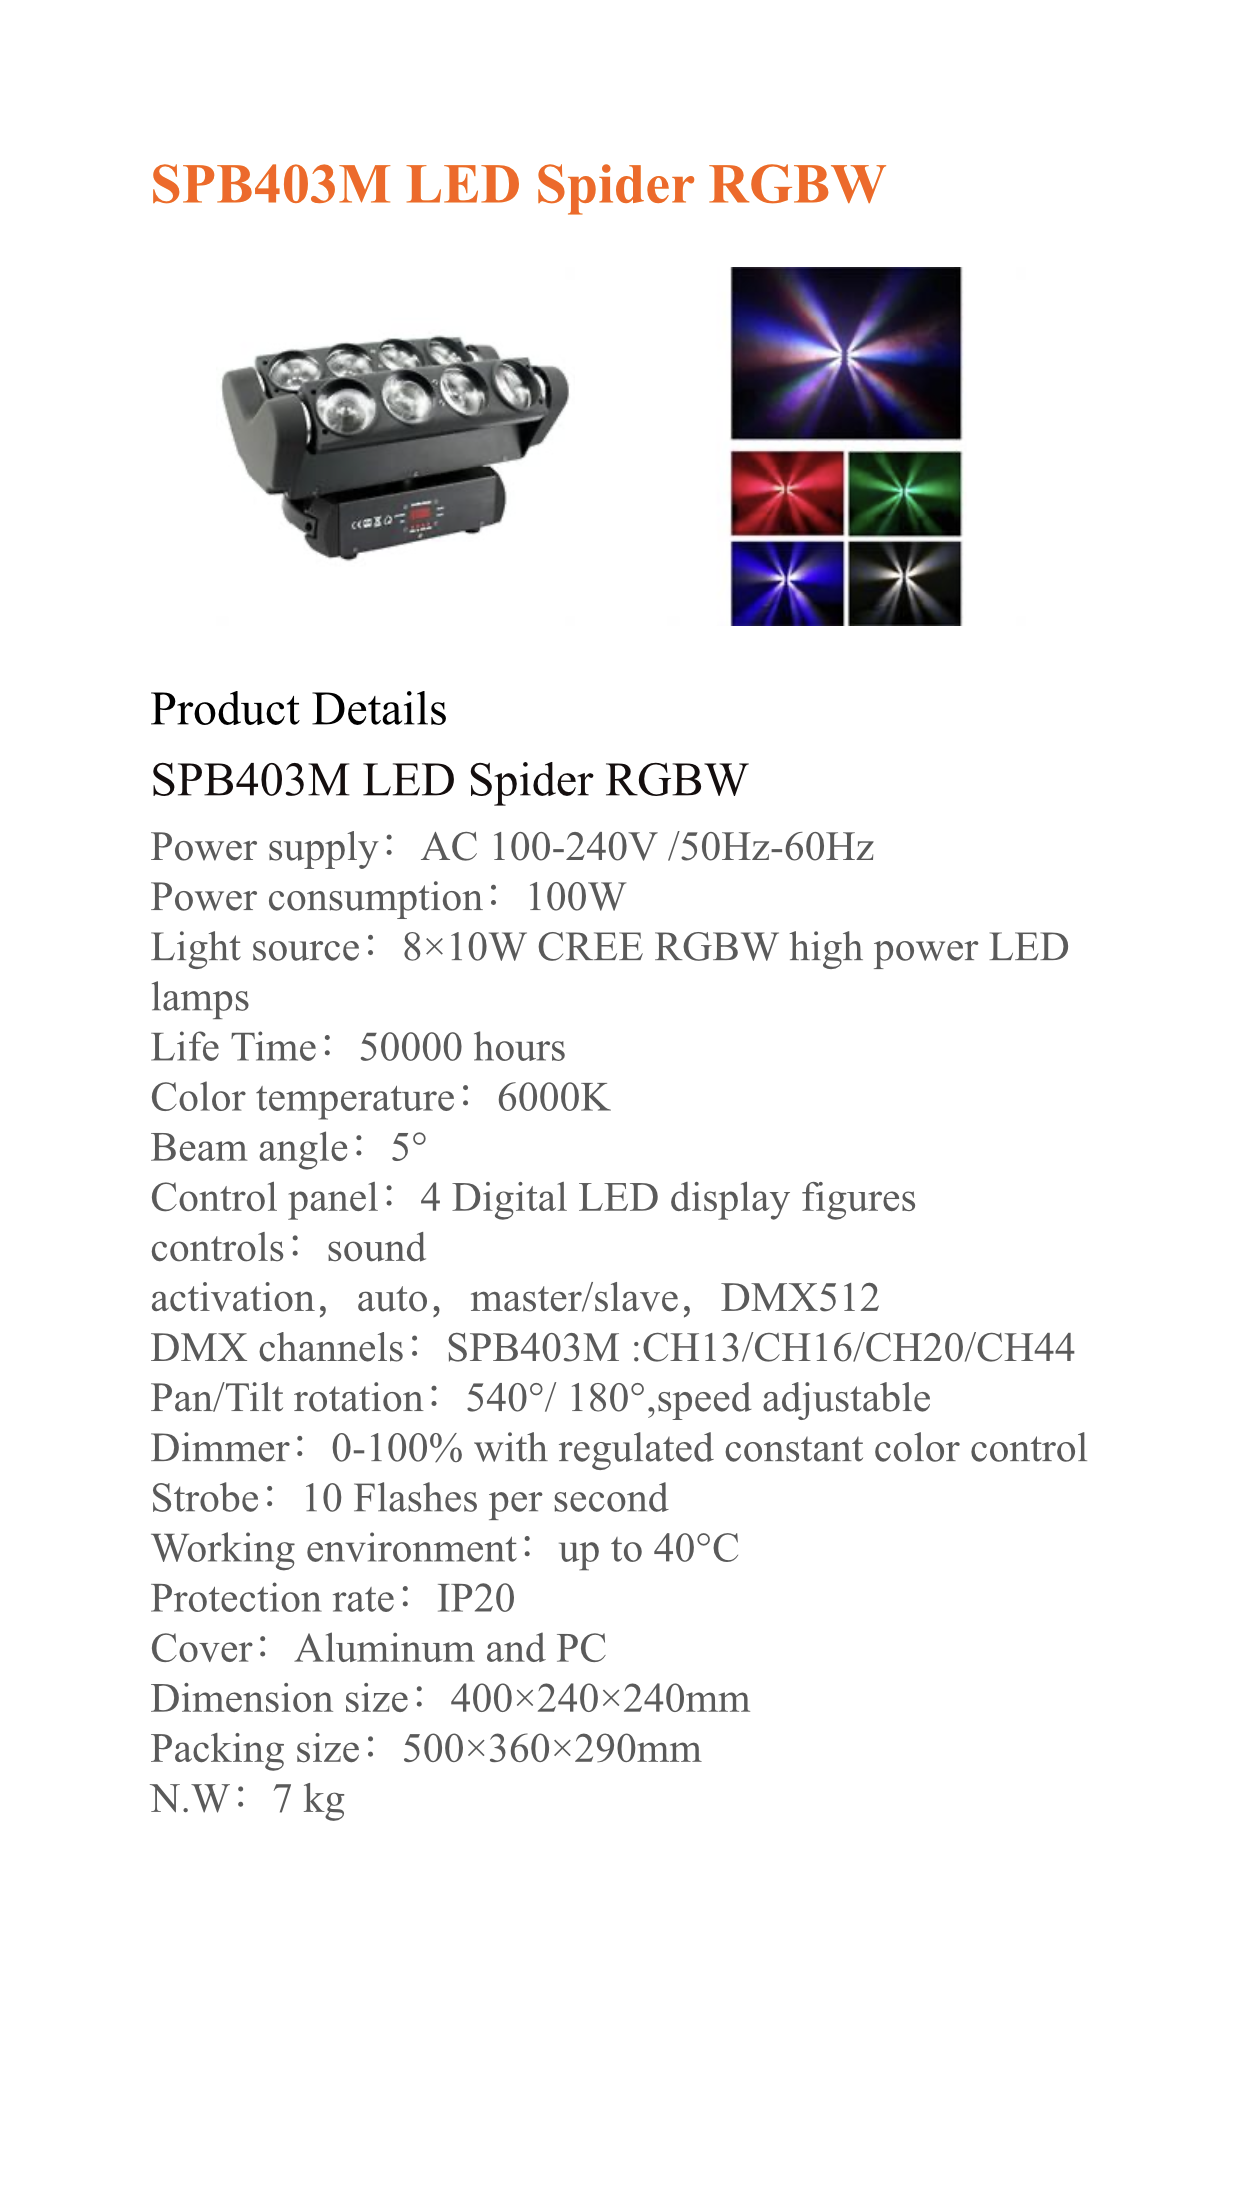 SPB 403 M LED SPIDER RGBW